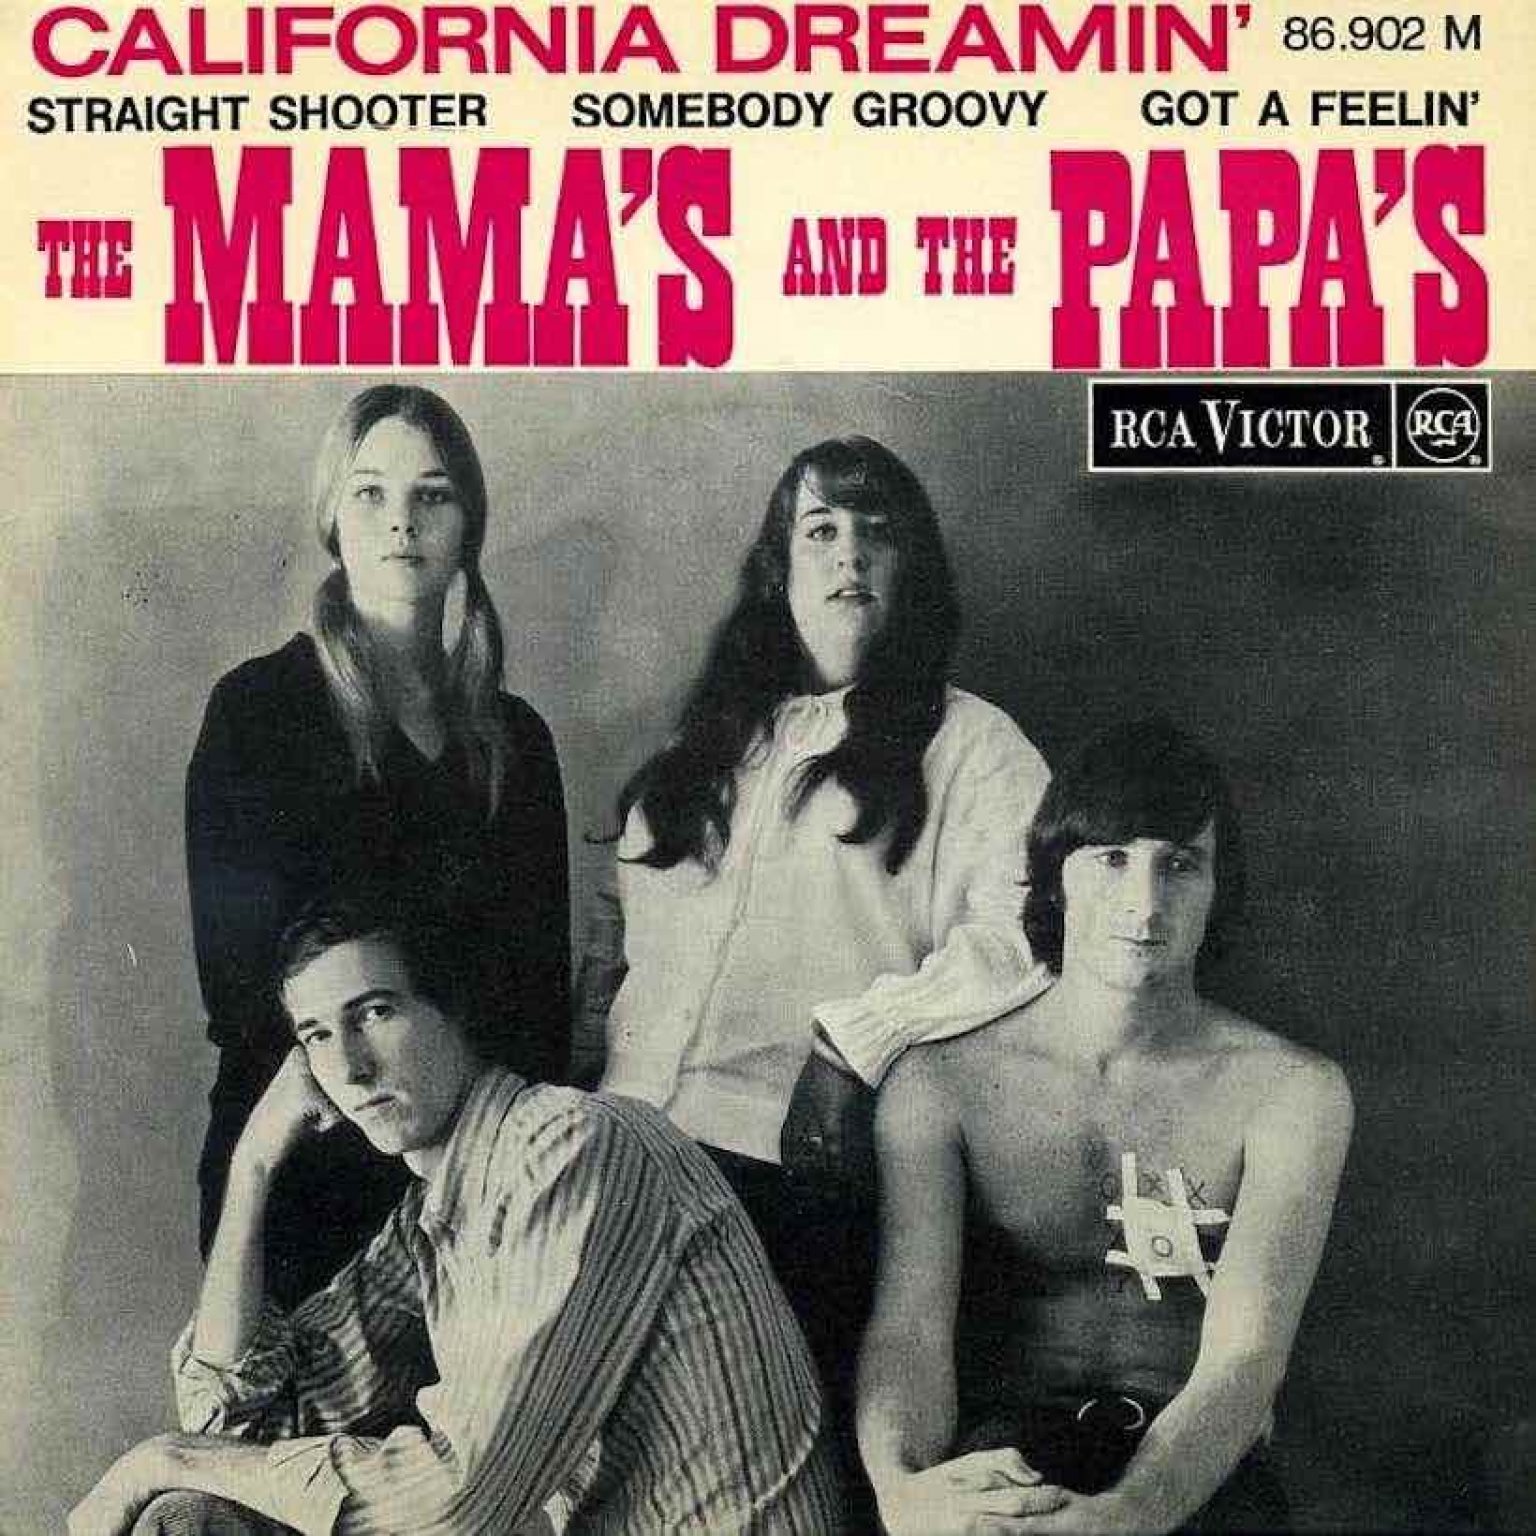 'California Dreamin'': Mamas And The Papas' Homesick Shade Of Winter